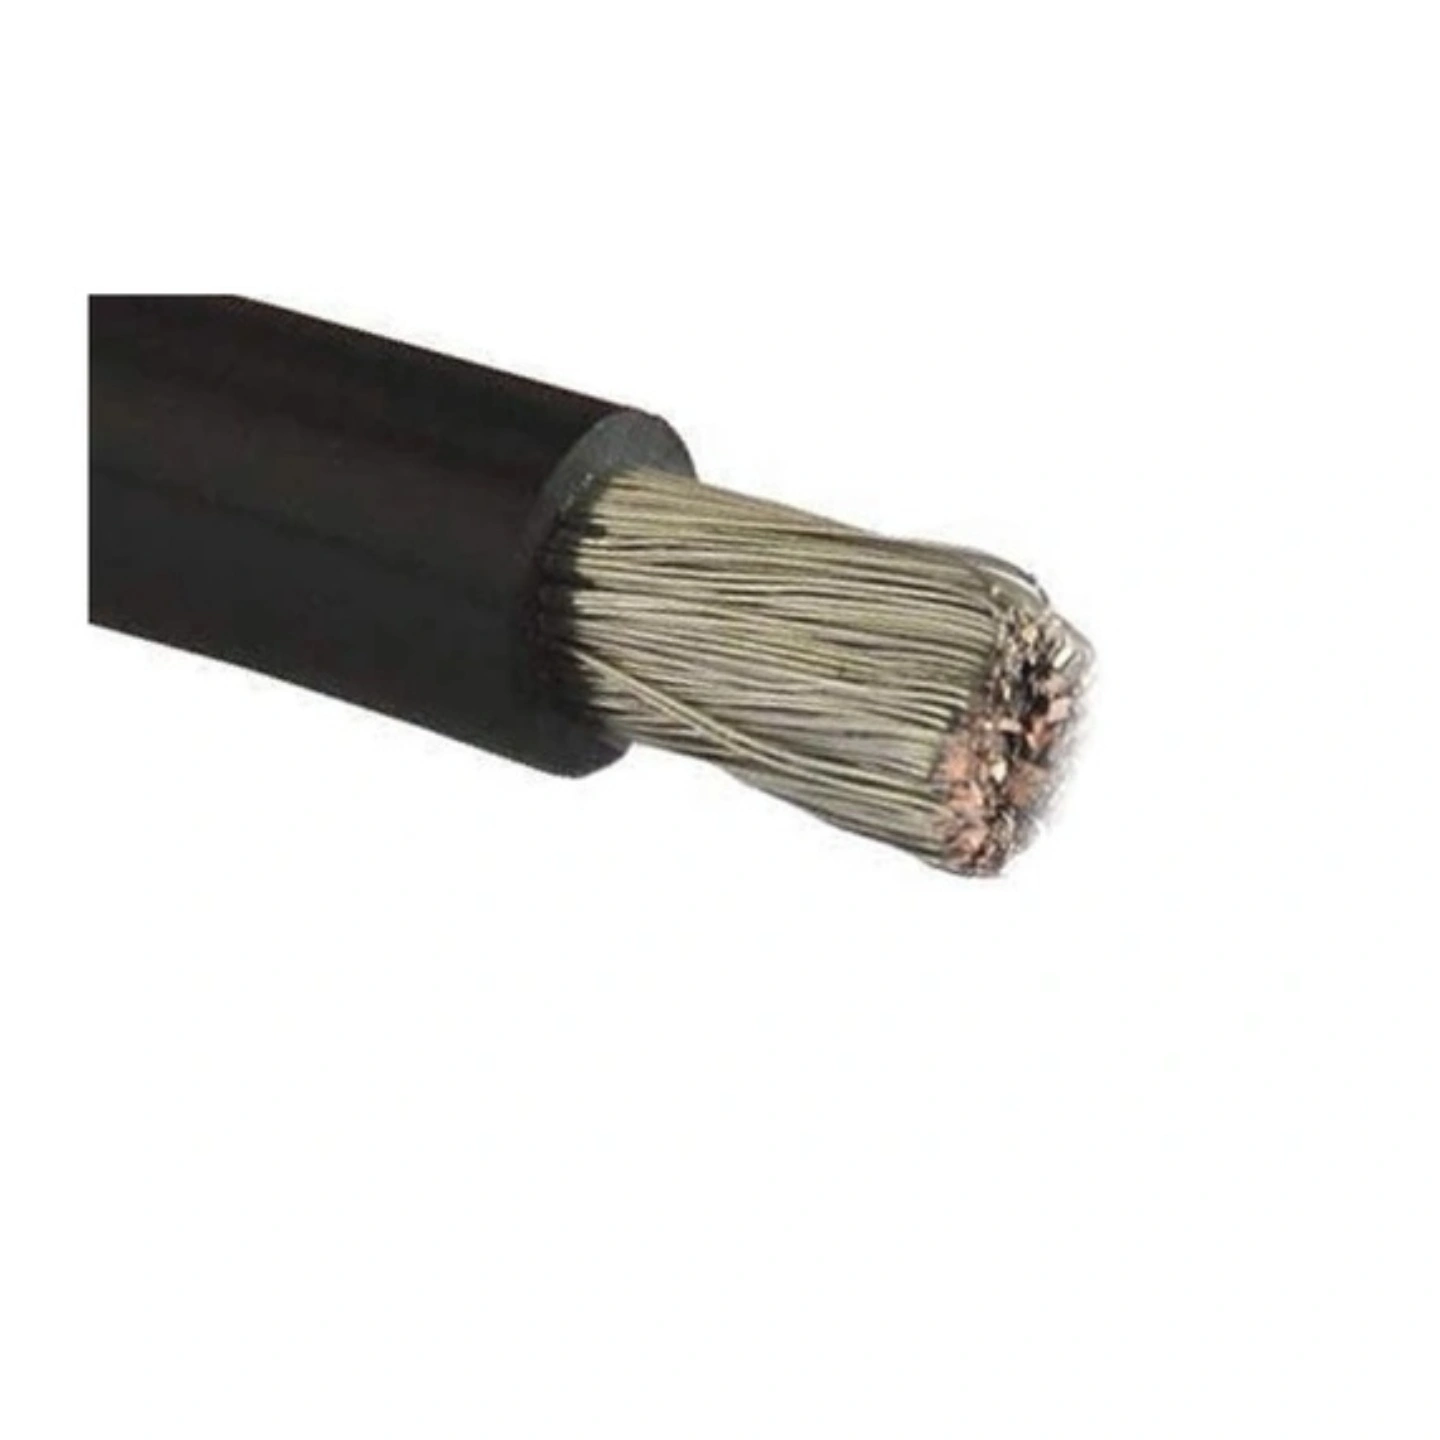 El. kabel fortinnet - sort 16 mm² metervare